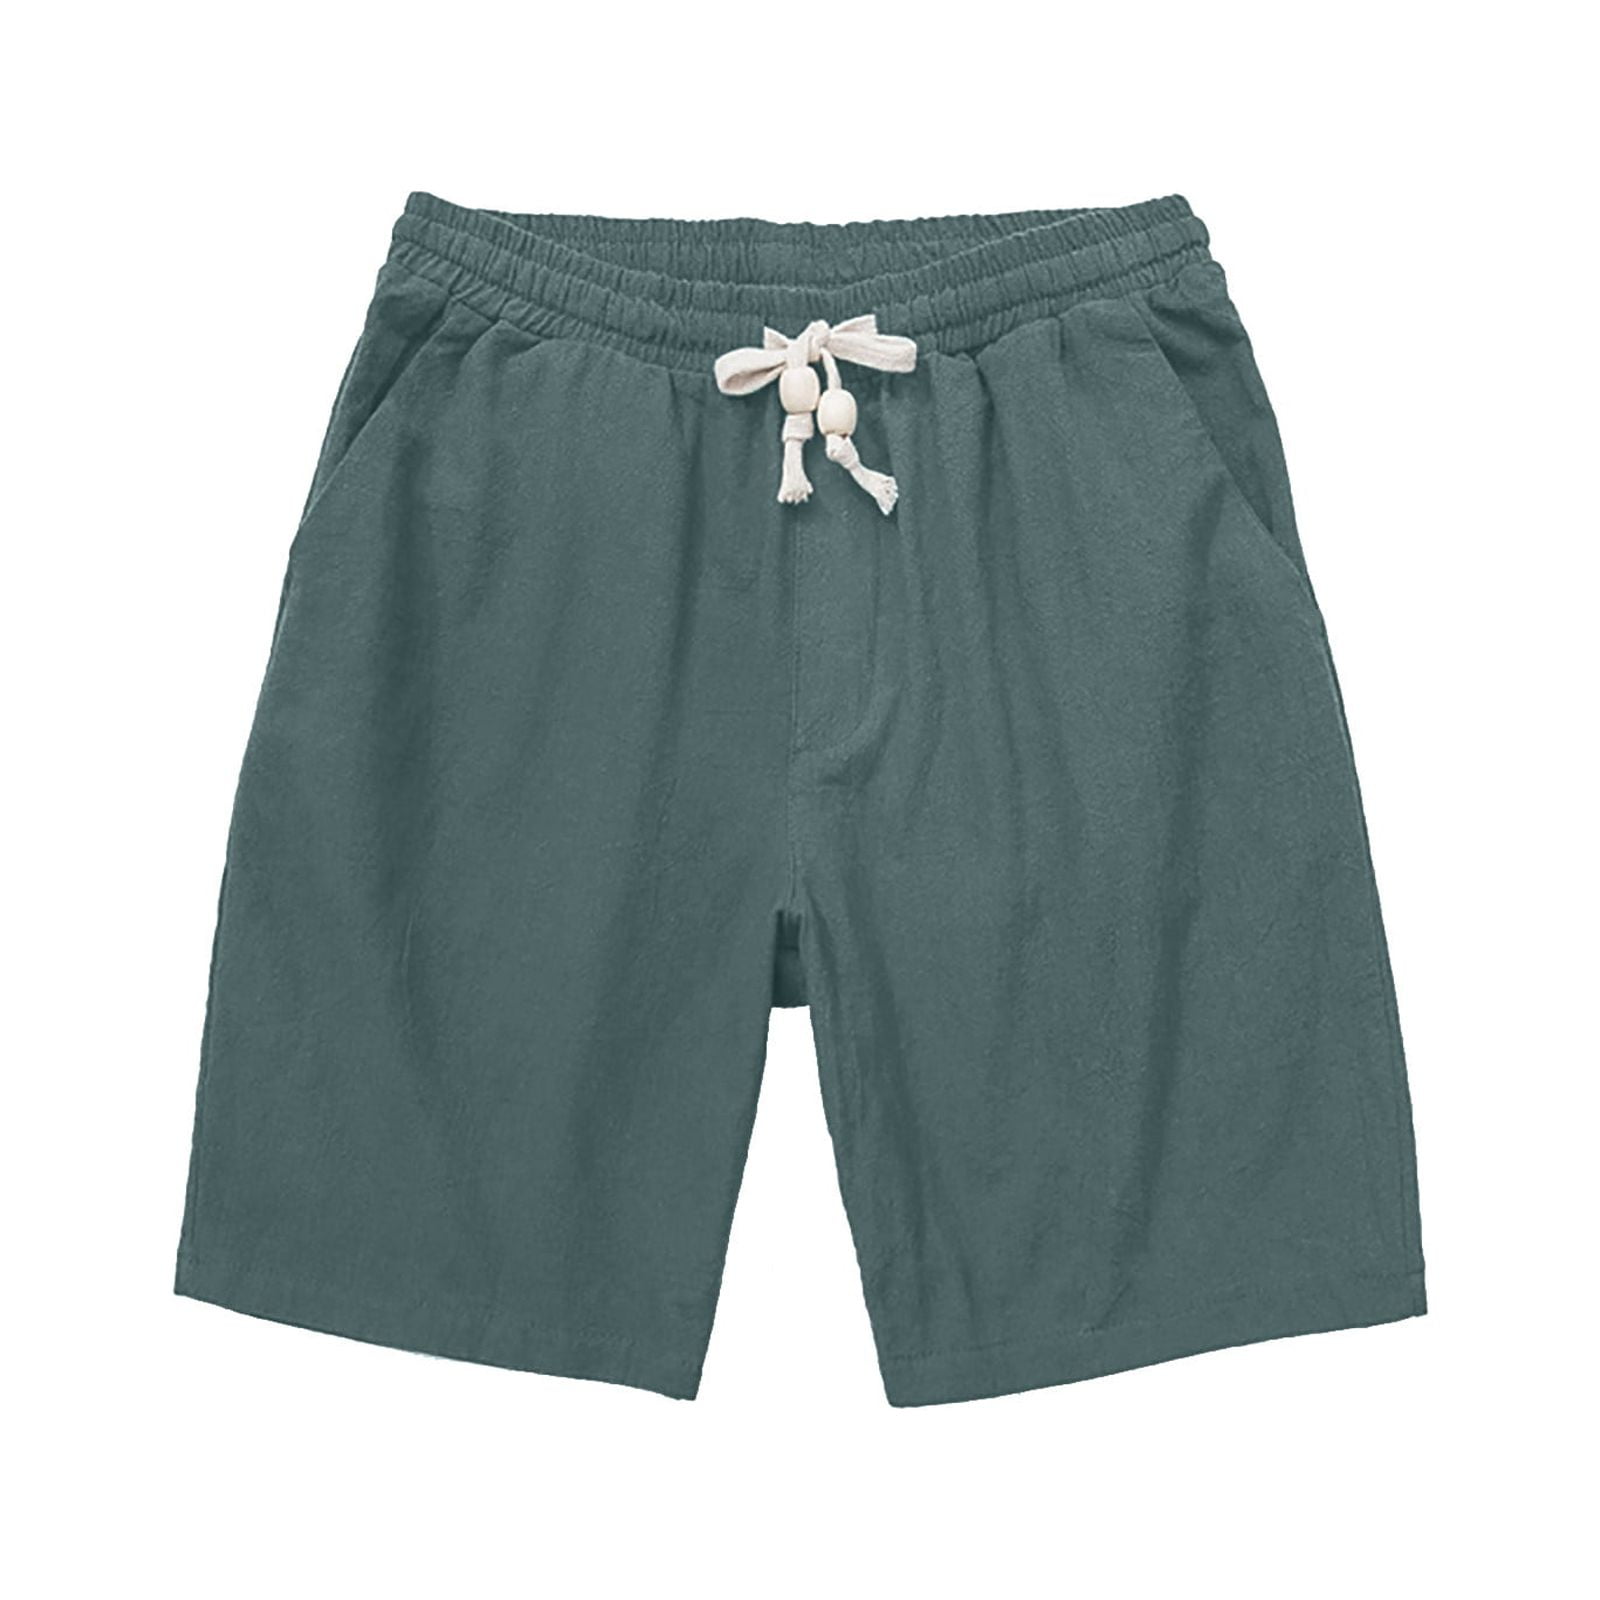 IYTR Men's Cotton Linen Shorts Casual Elastic Waist Drawstring Shorts ...